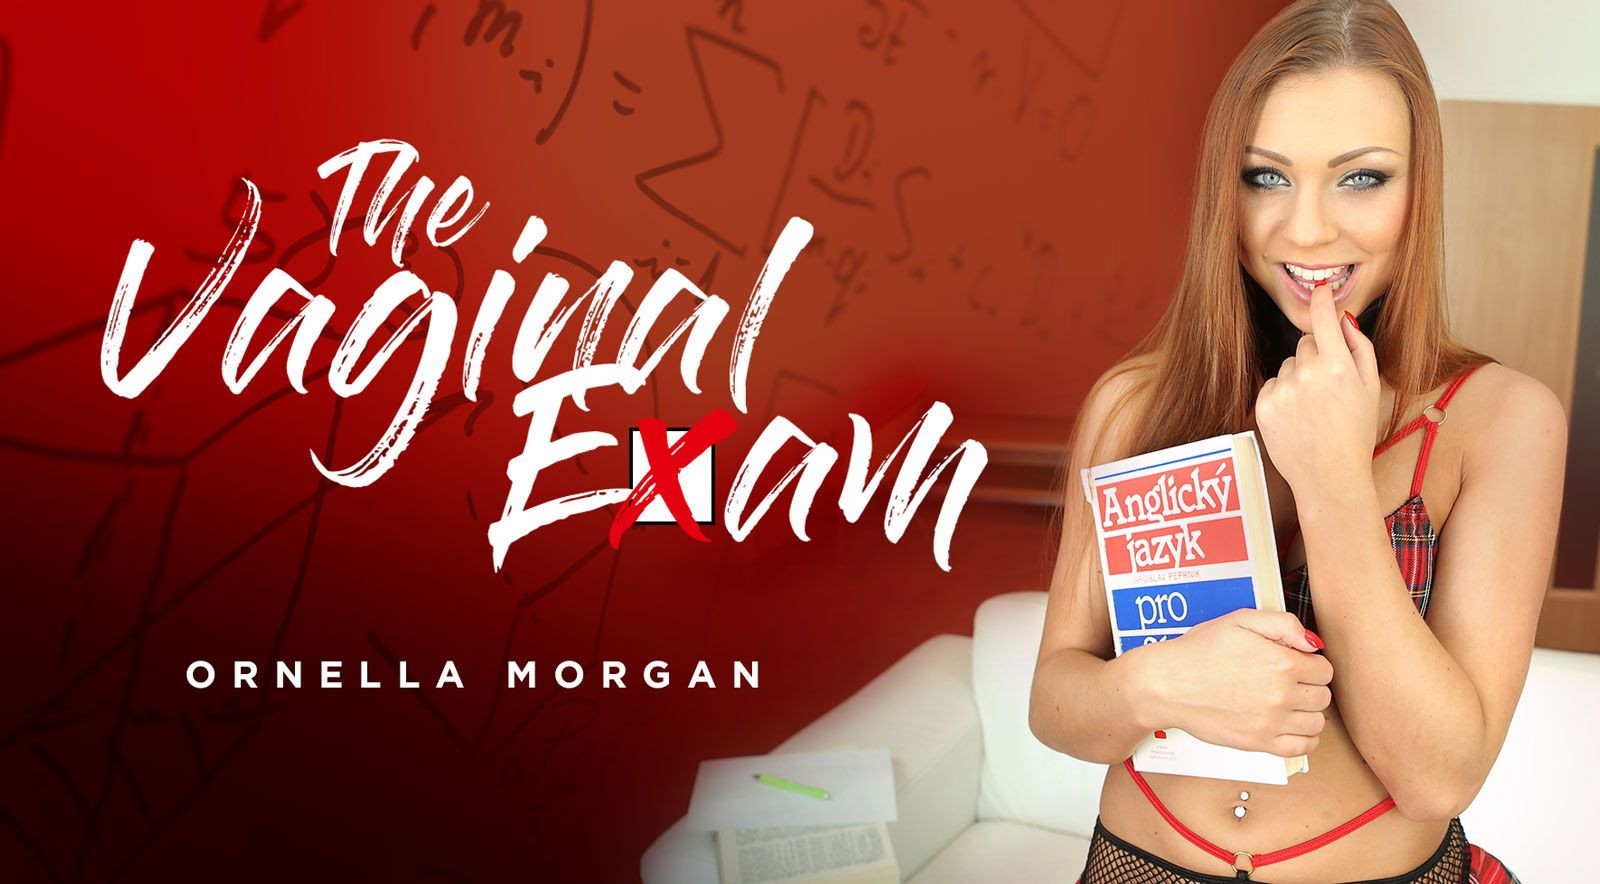 The Vaginal Exam: Ornella Morgan Slideshow